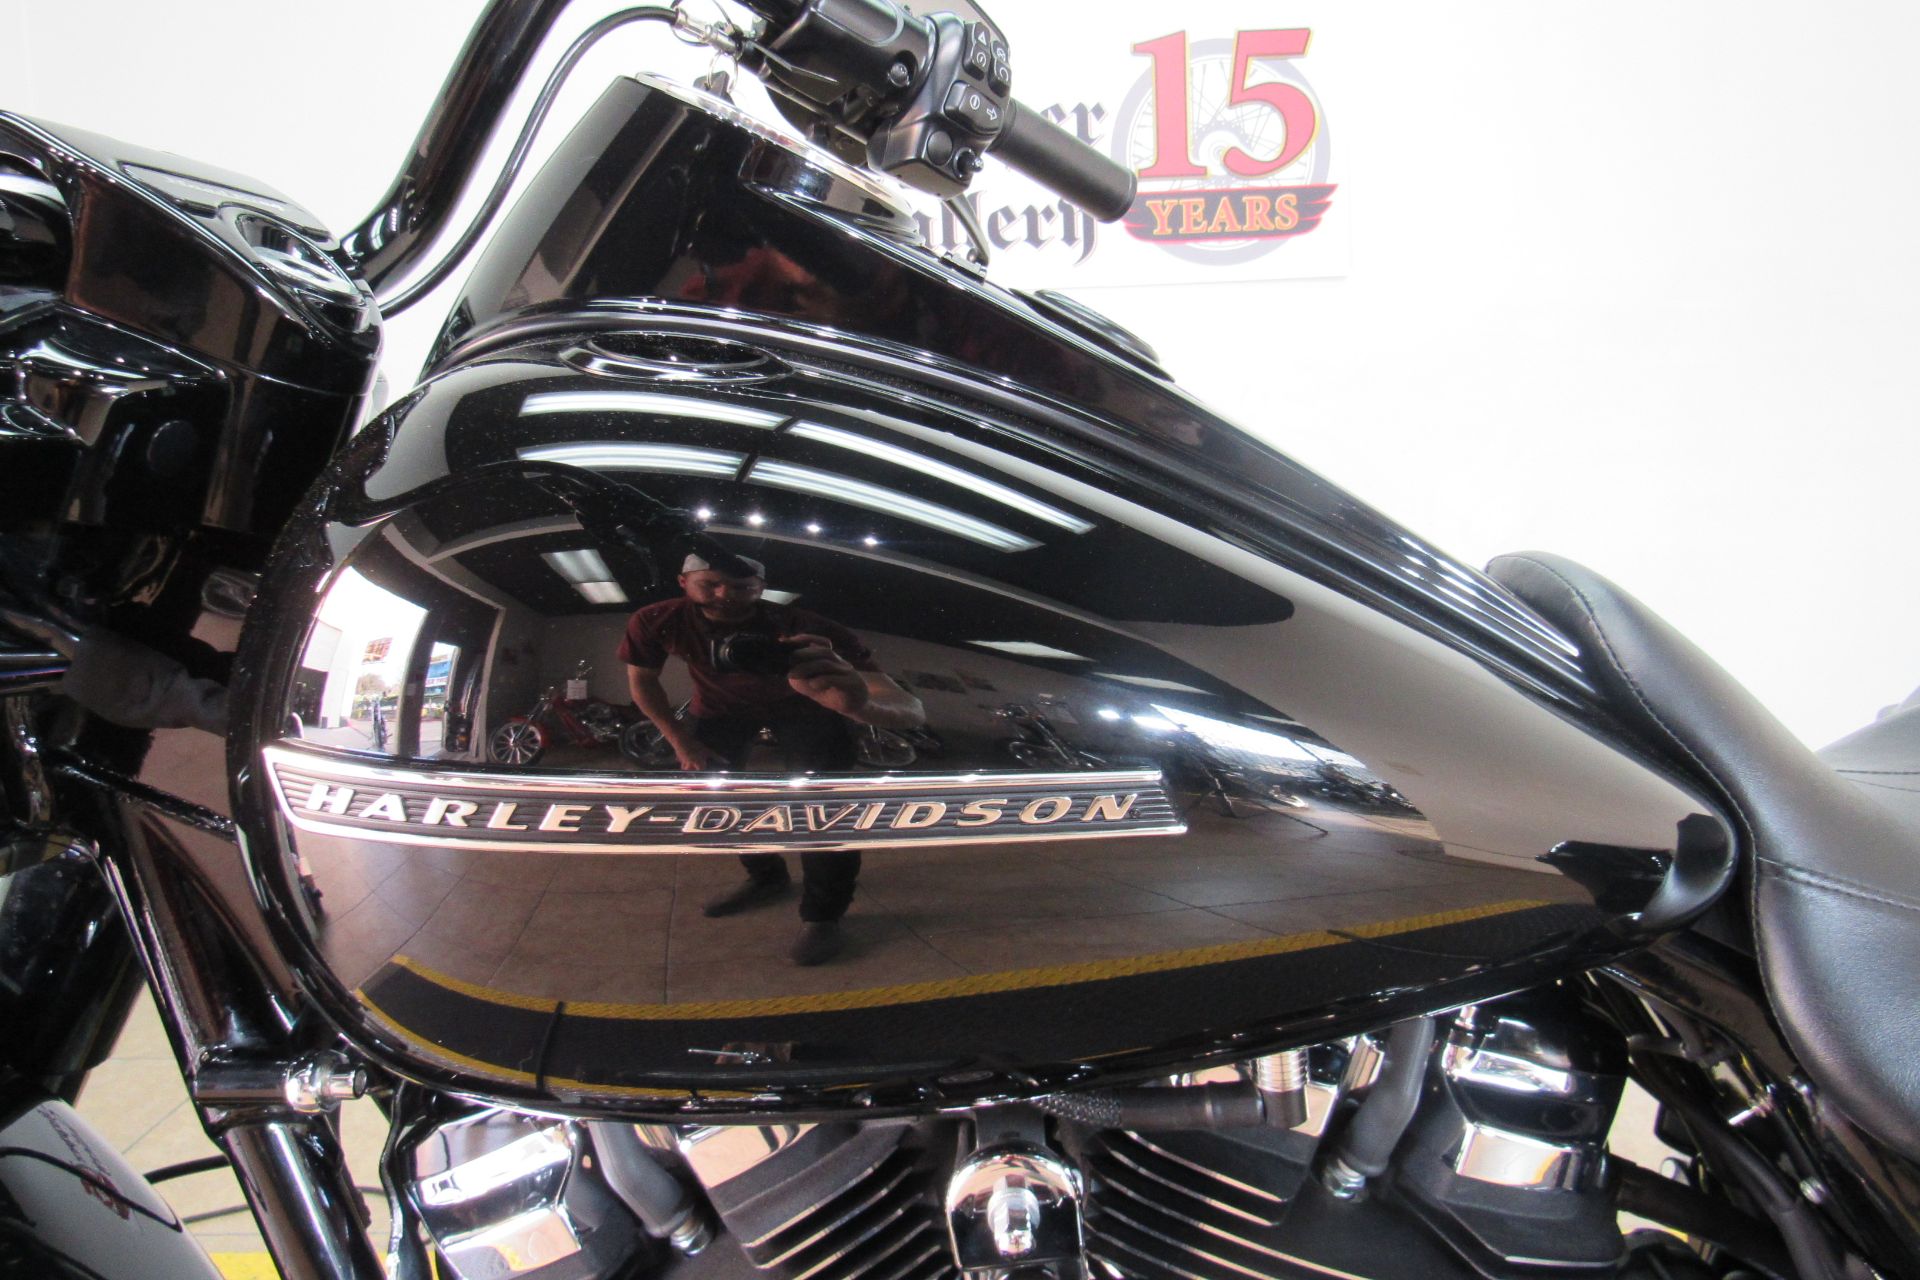 2019 Harley-Davidson Road King® Special in Temecula, California - Photo 8